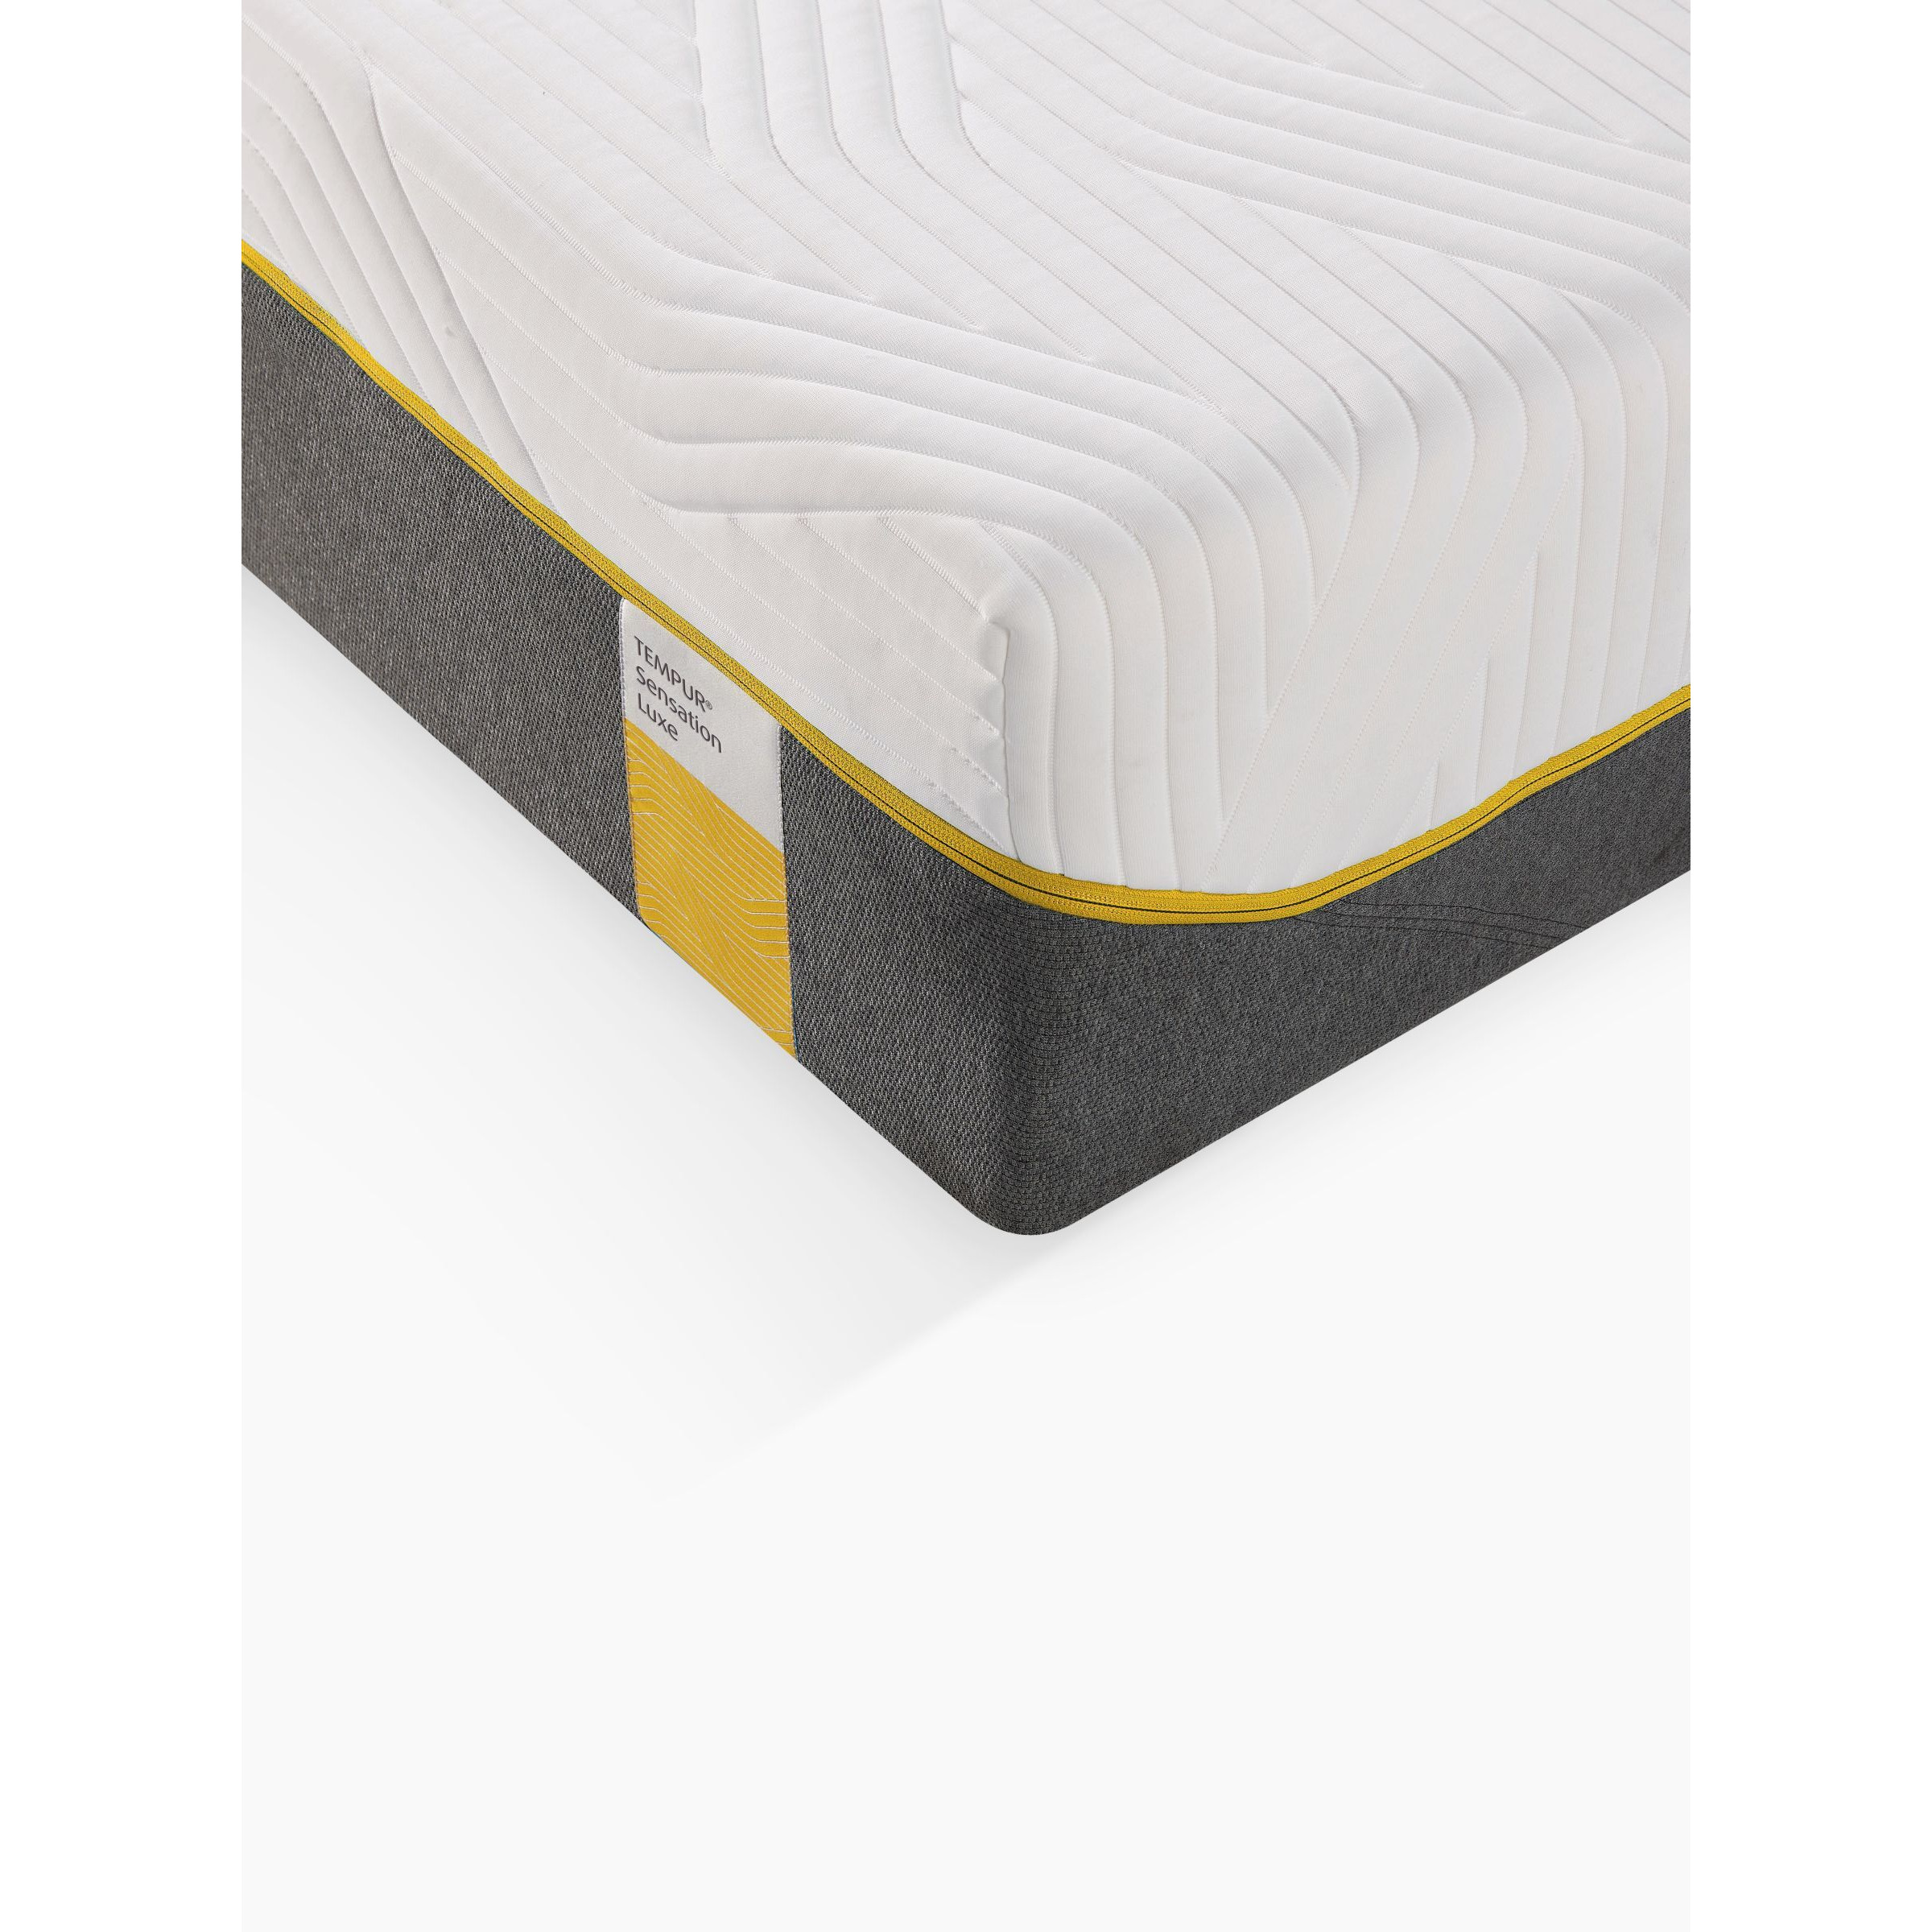 TEMPUR® Sensation Luxe Memory Foam Mattress, Firm Tension, European King Size - image 1